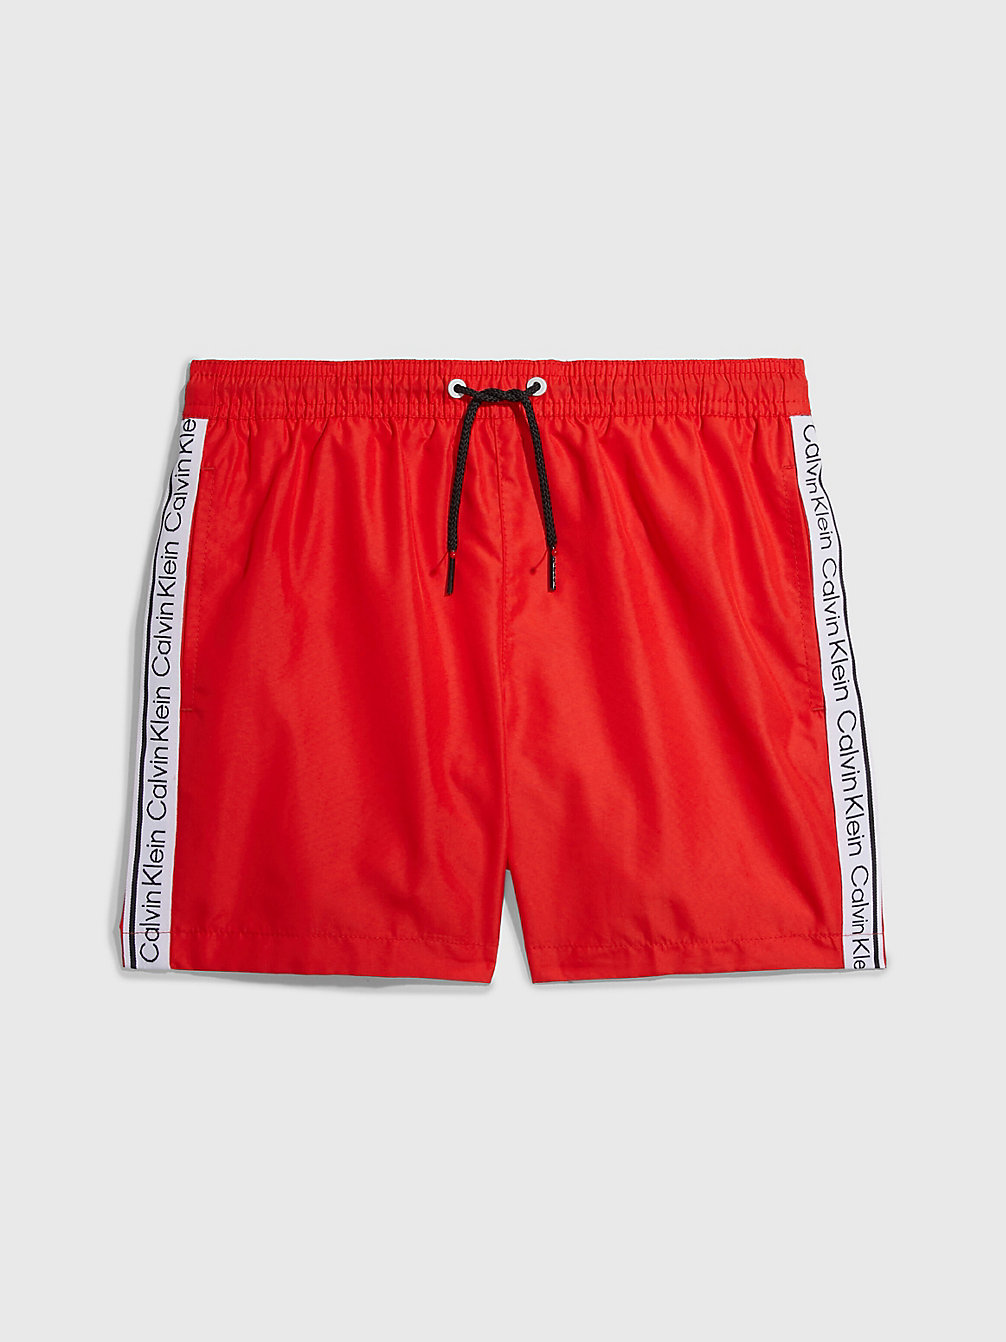 CAJUN RED > Jongenszwemshorts - Logo Tape > undefined boys - Calvin Klein